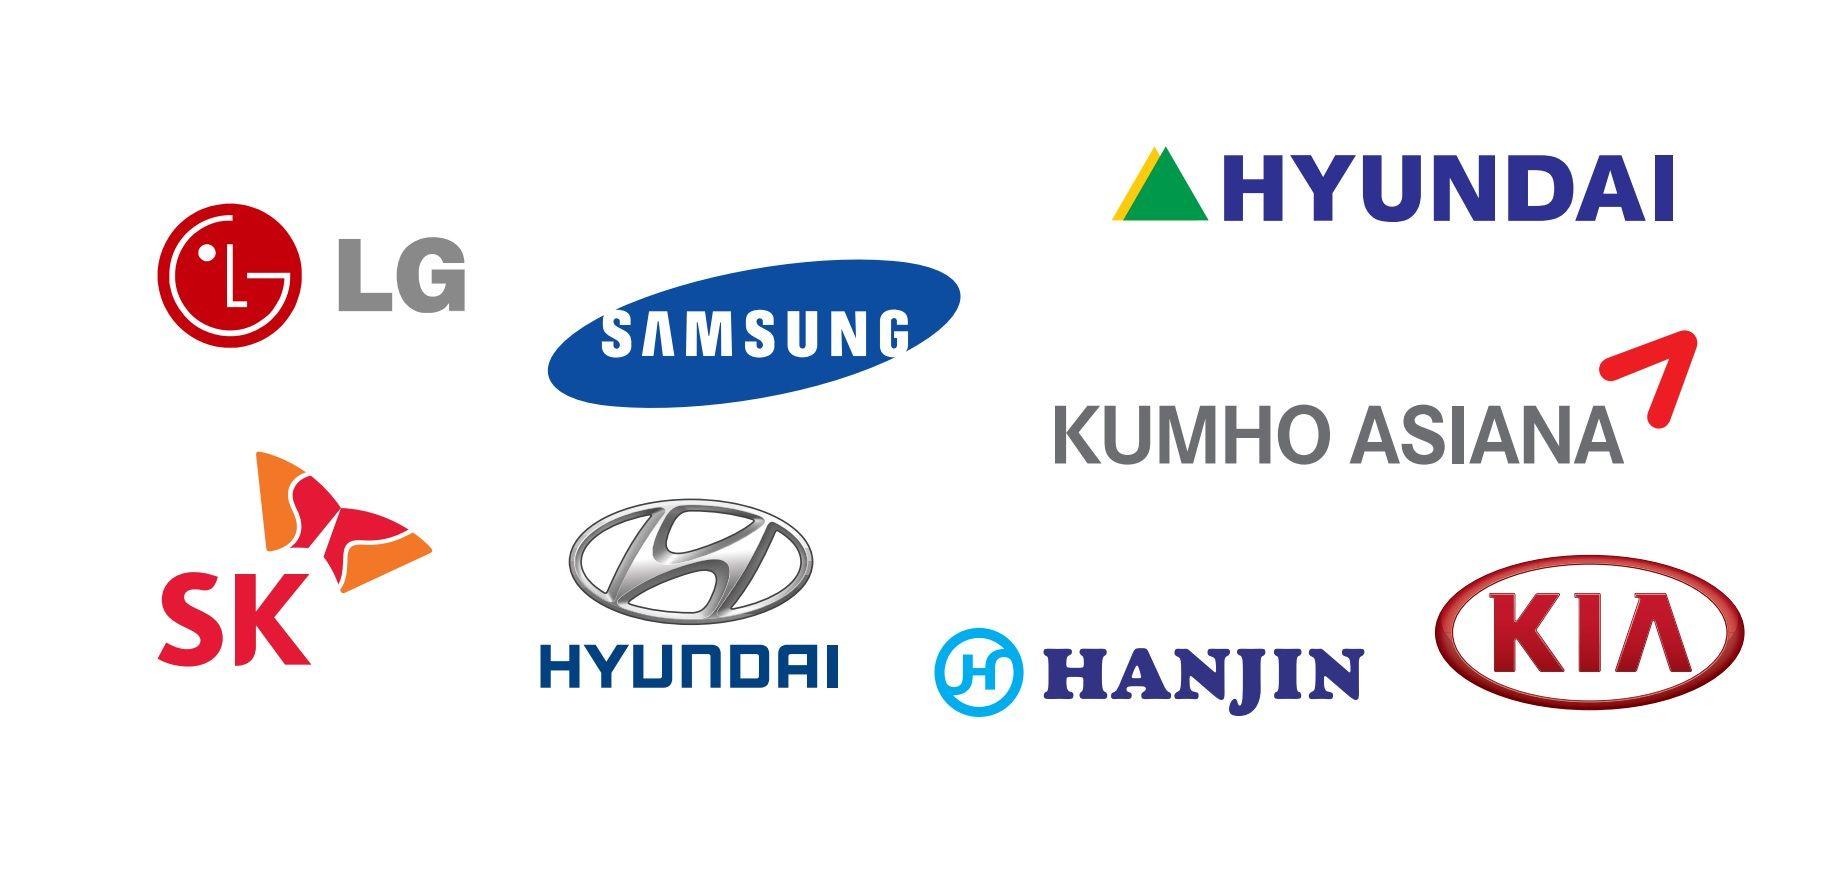 South Korea Company Logo - Profitability of Korea's Top 30 Business Groups Tumbled in 2014 ...